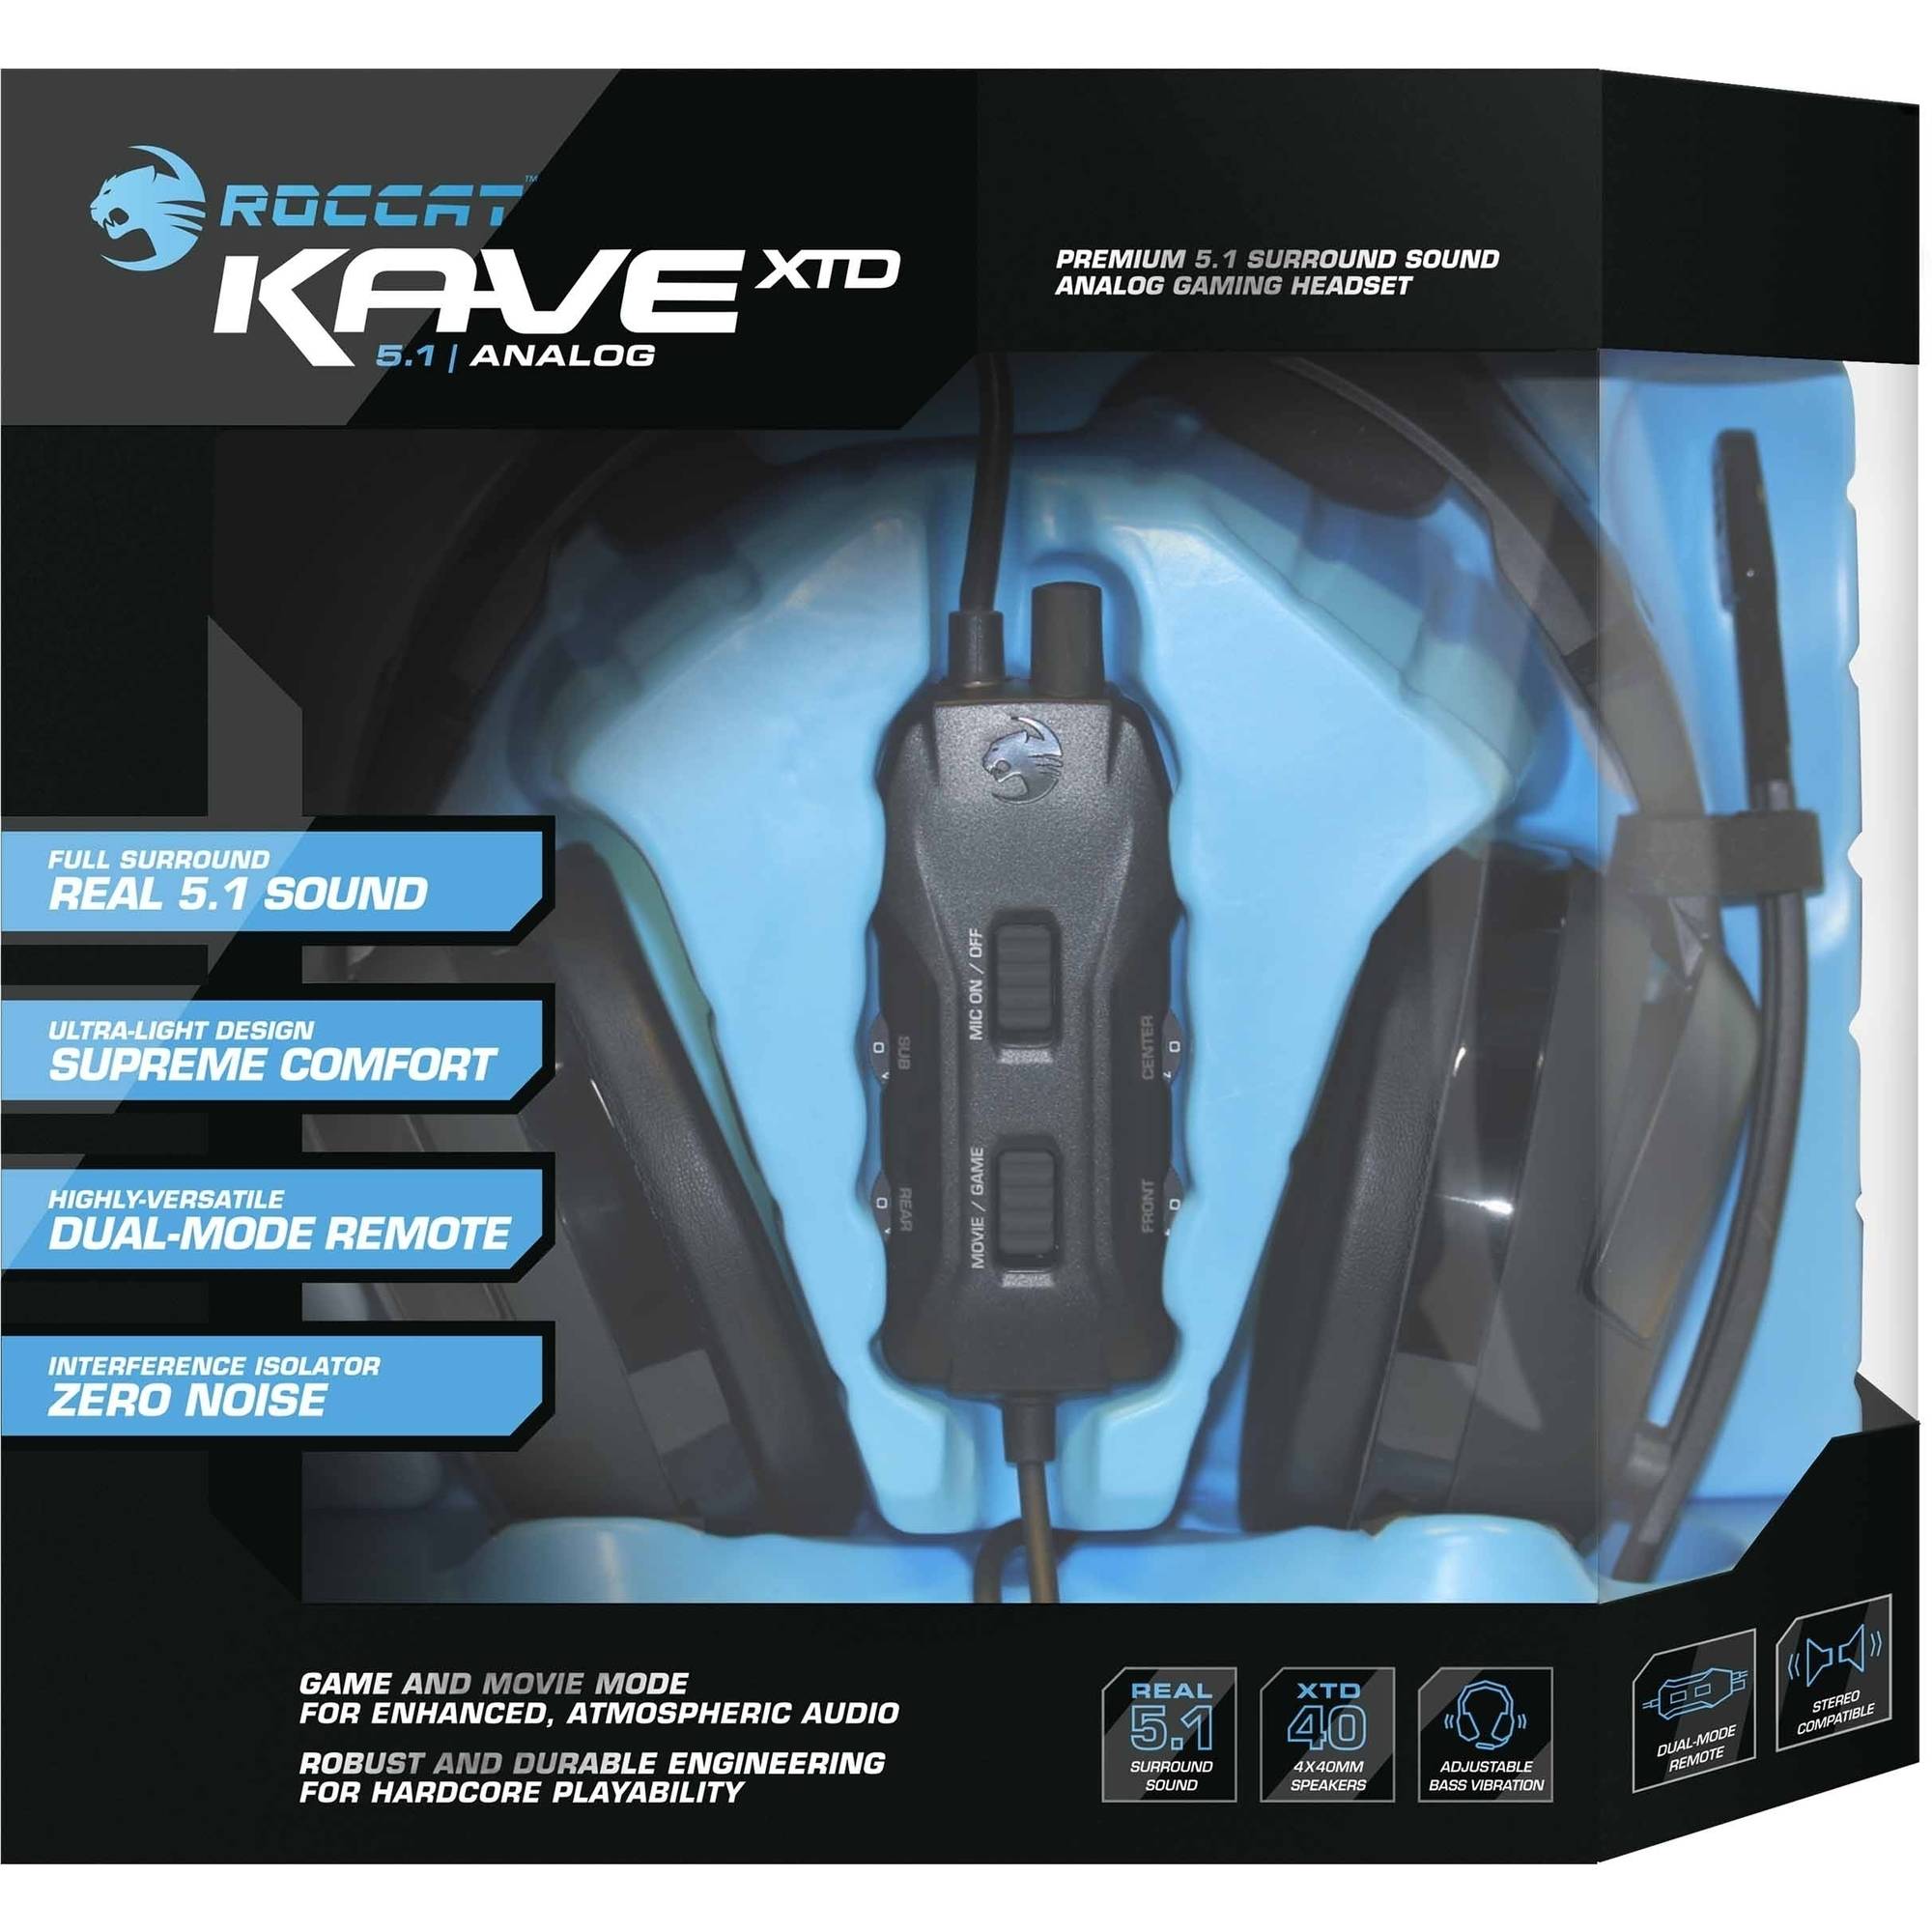 ROCCAT KAVE XTD Analog Premium 5.1 Surround Sound Analog Gaming Headset - image 1 of 6